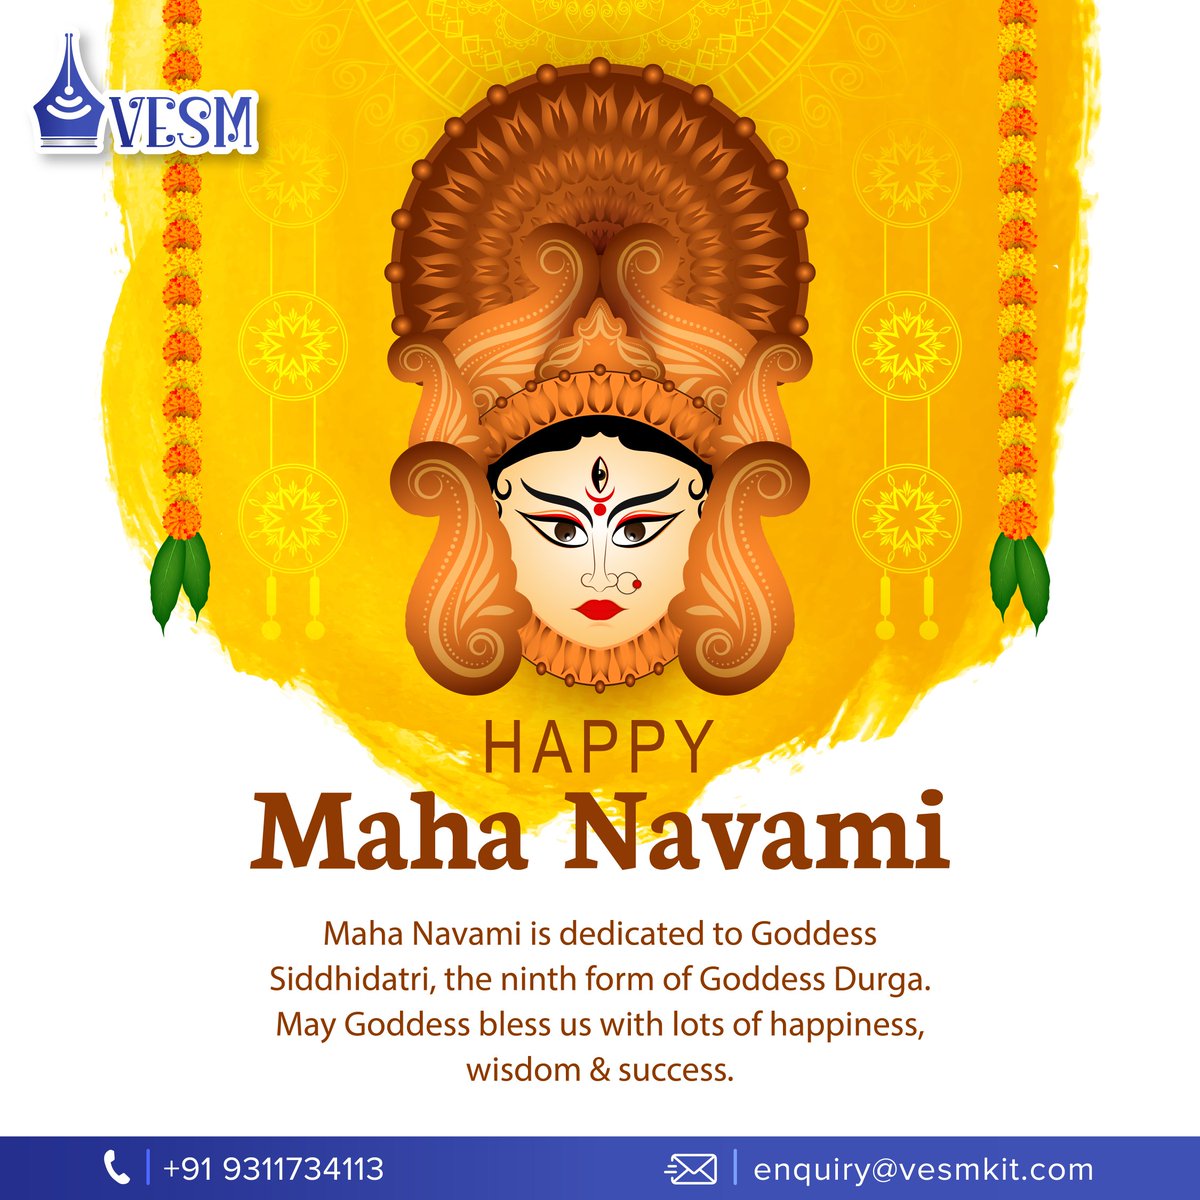 Maha Navami is dedicated to Goddess Siddhidatri, the ninth form of Goddess Durga.
May Goddess bless us with lots of happiness, wisdom & success.
#VESM #schoolmanagement 
#mahanavami #happynavratri #navratri2022 #navratrispecial #shaktiutsav  #celebrations #festival #happiness